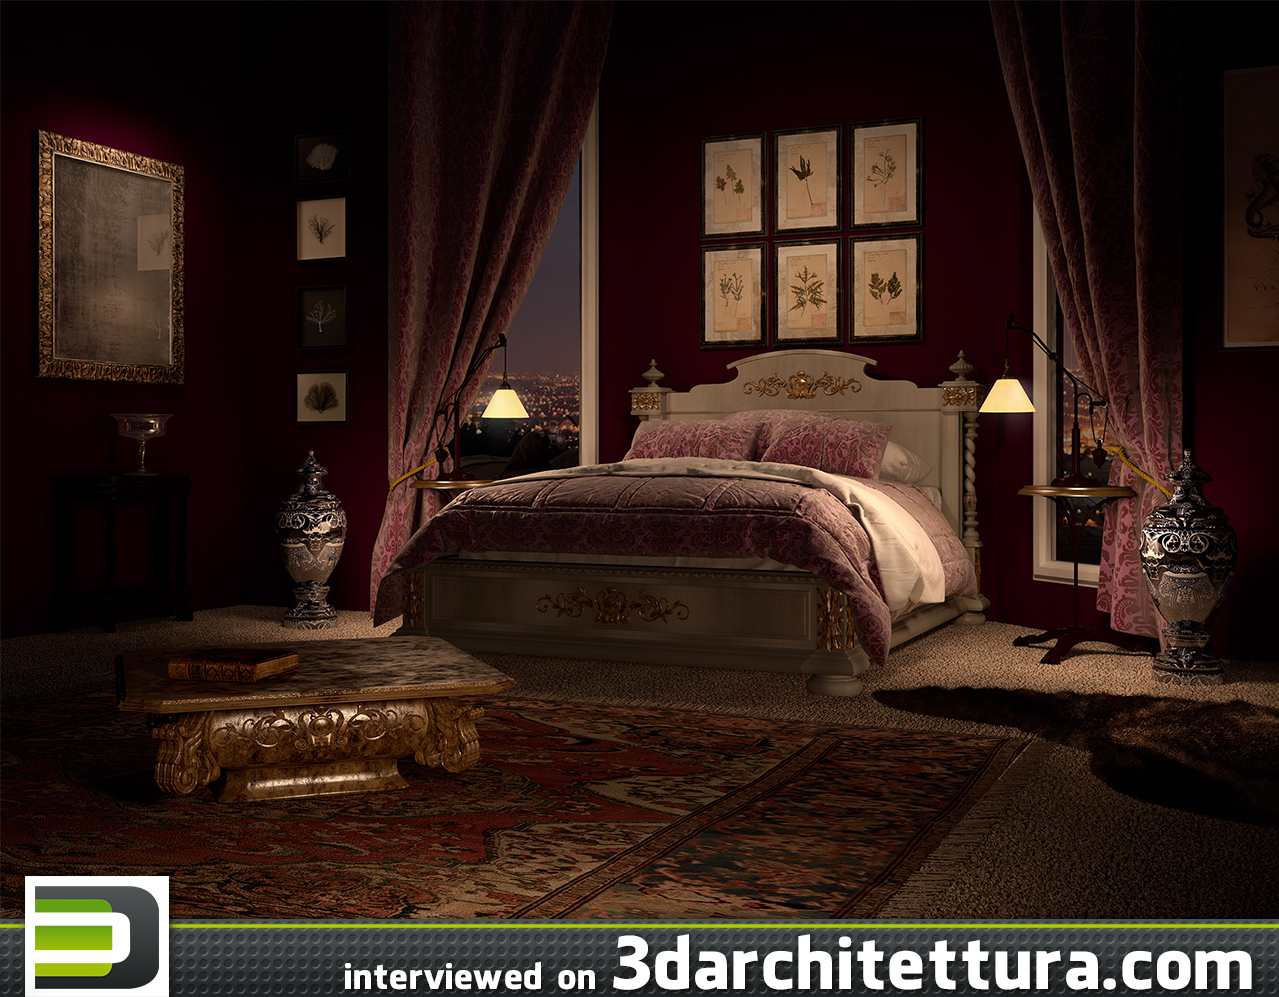 Alfonso Cucinelli interviewed for 3d Architettura: render, 3d, design, cg, architecture